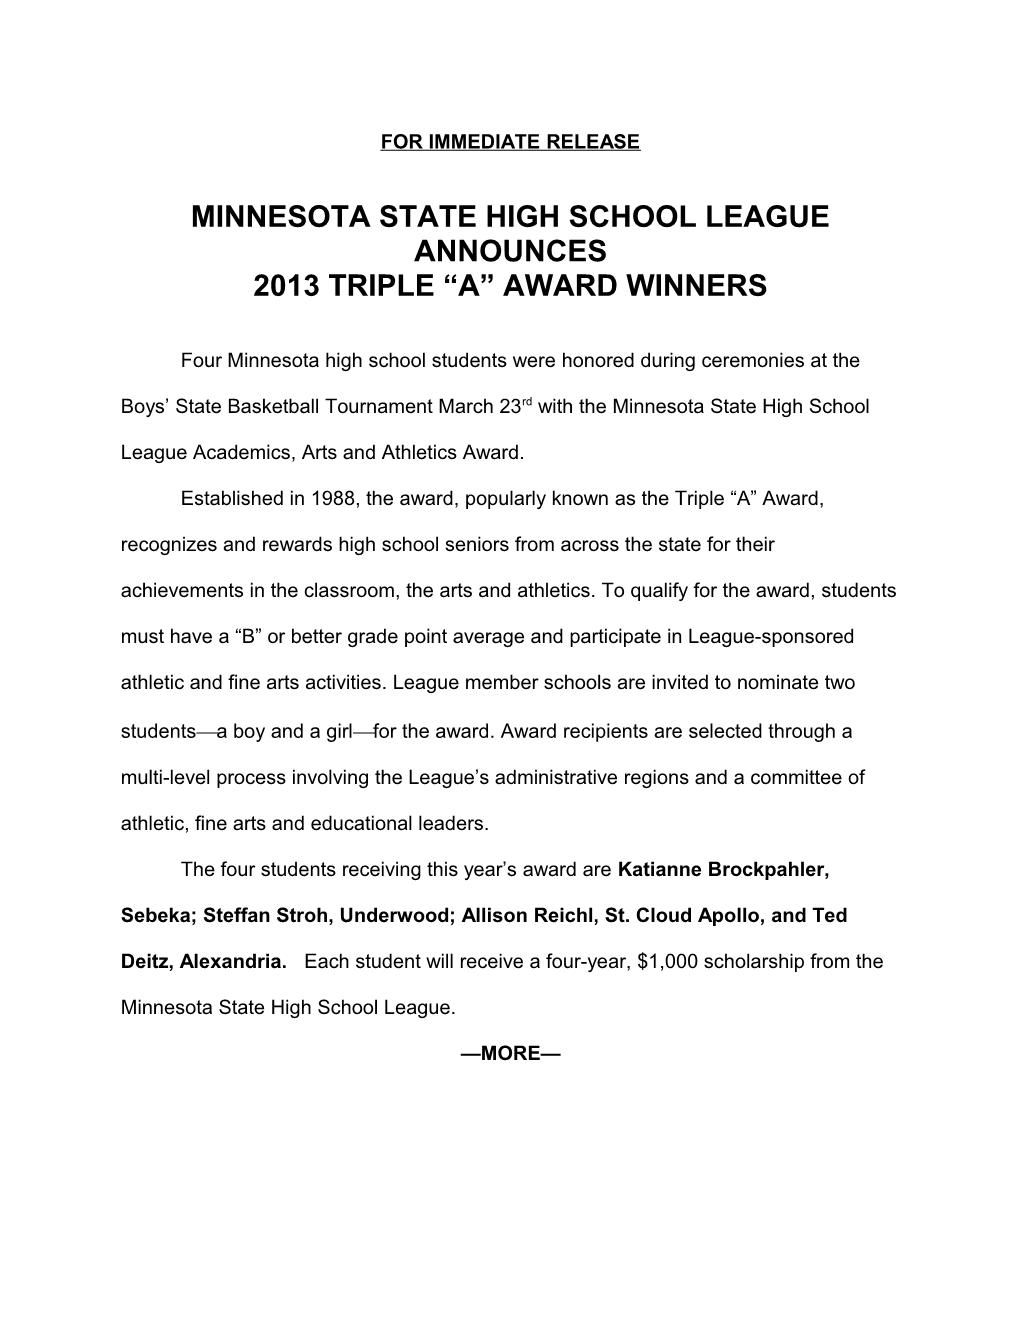 Minnesota State High School League Announces